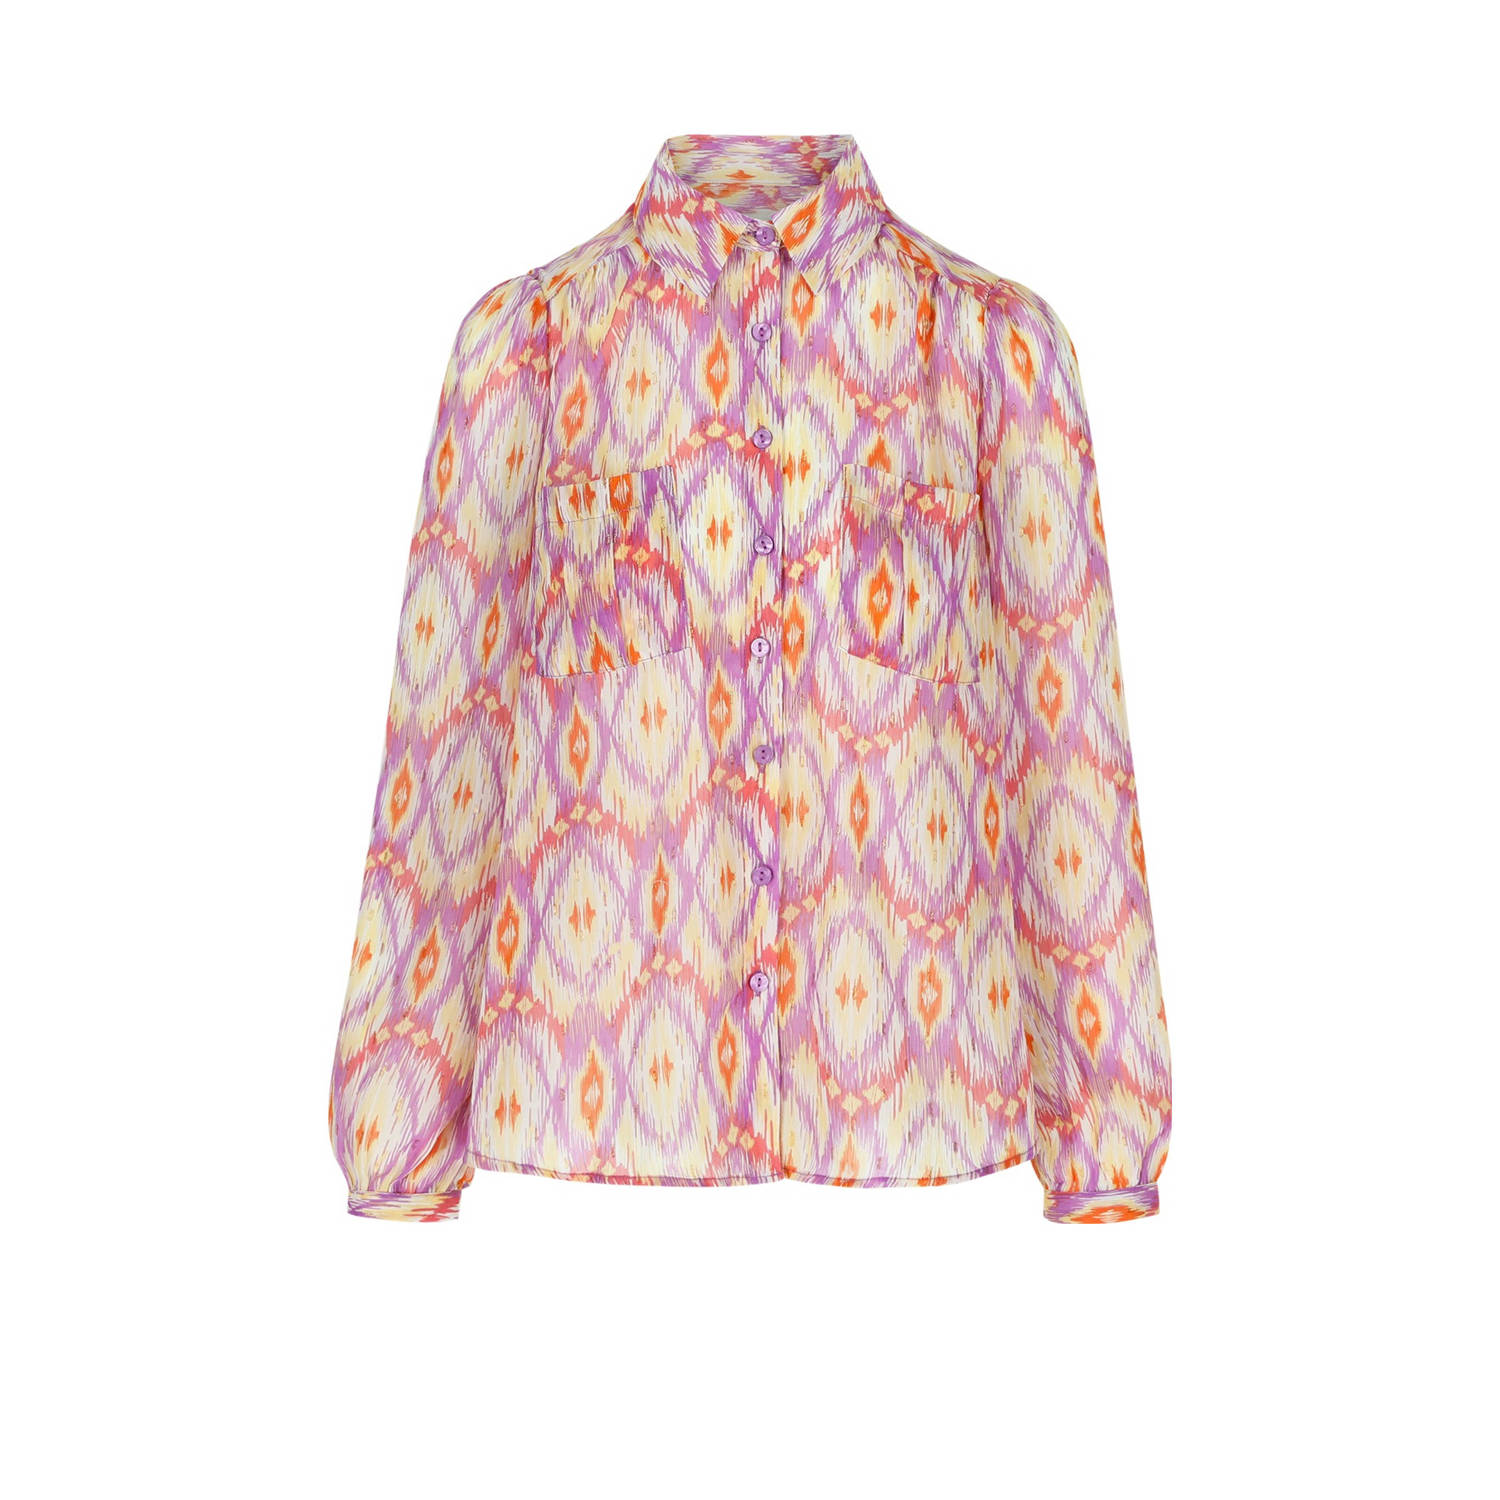 LOLALIZA blouse met all over print roze oranje koraalrood